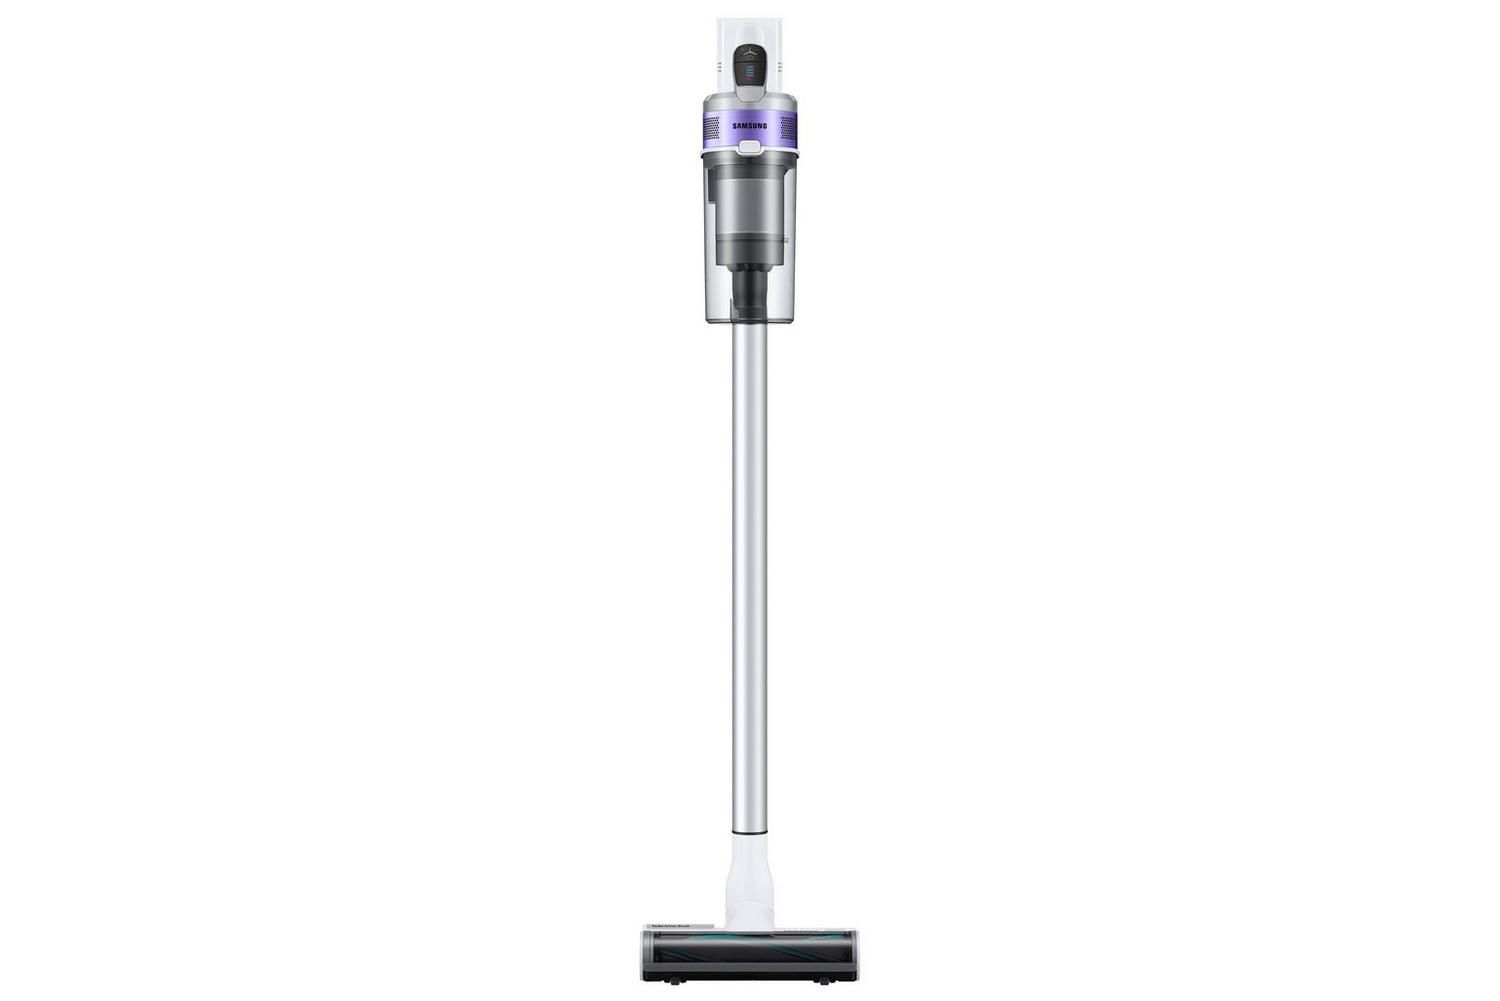 Samsung VS15T7031R4 Vacuum Cleaner Cordless Stick Jet 70 Turbo REFURBISHED